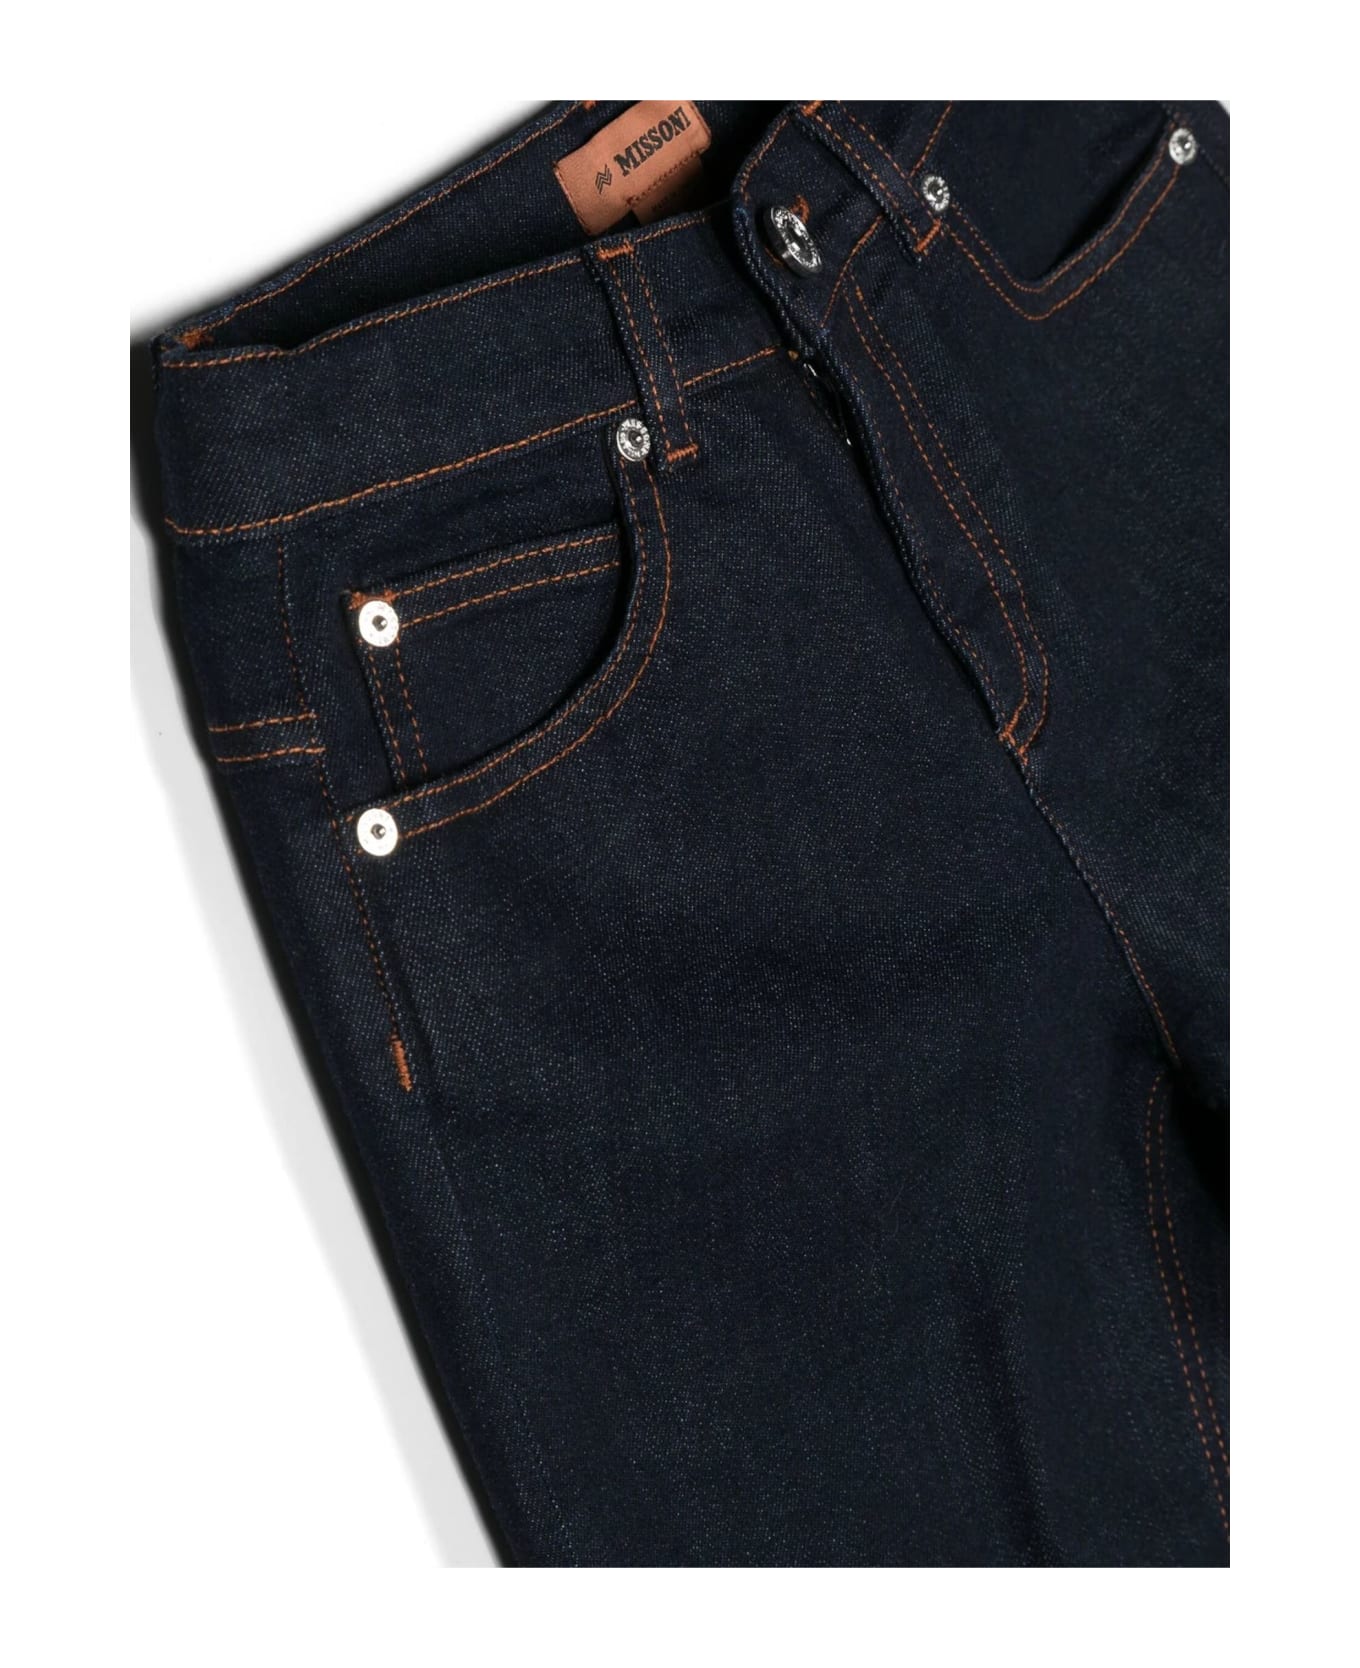 Missoni Kids Blue Cotton Jeans - Denim